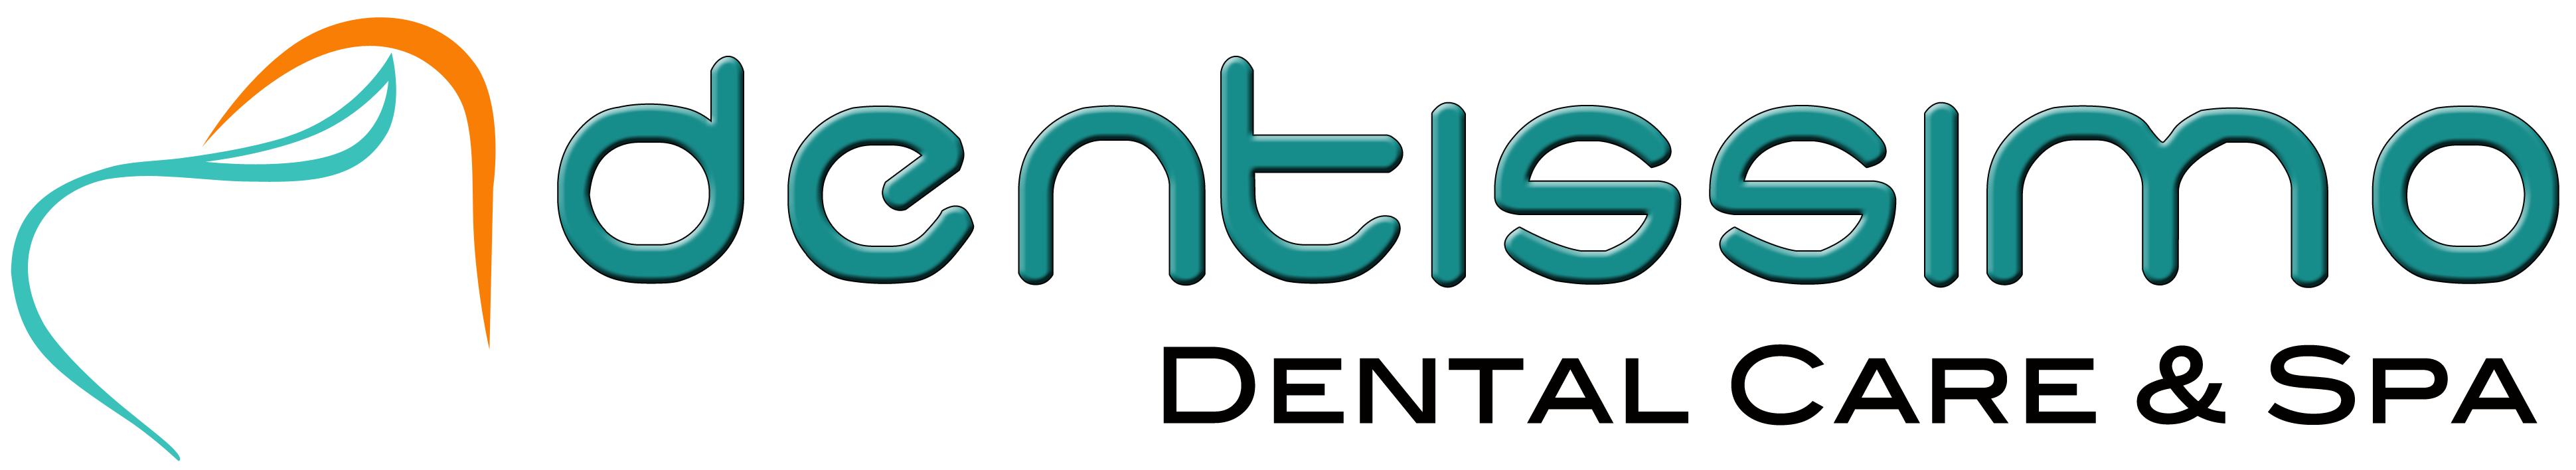 Dentissimo Dental Care & Spa|Veterinary|Medical Services